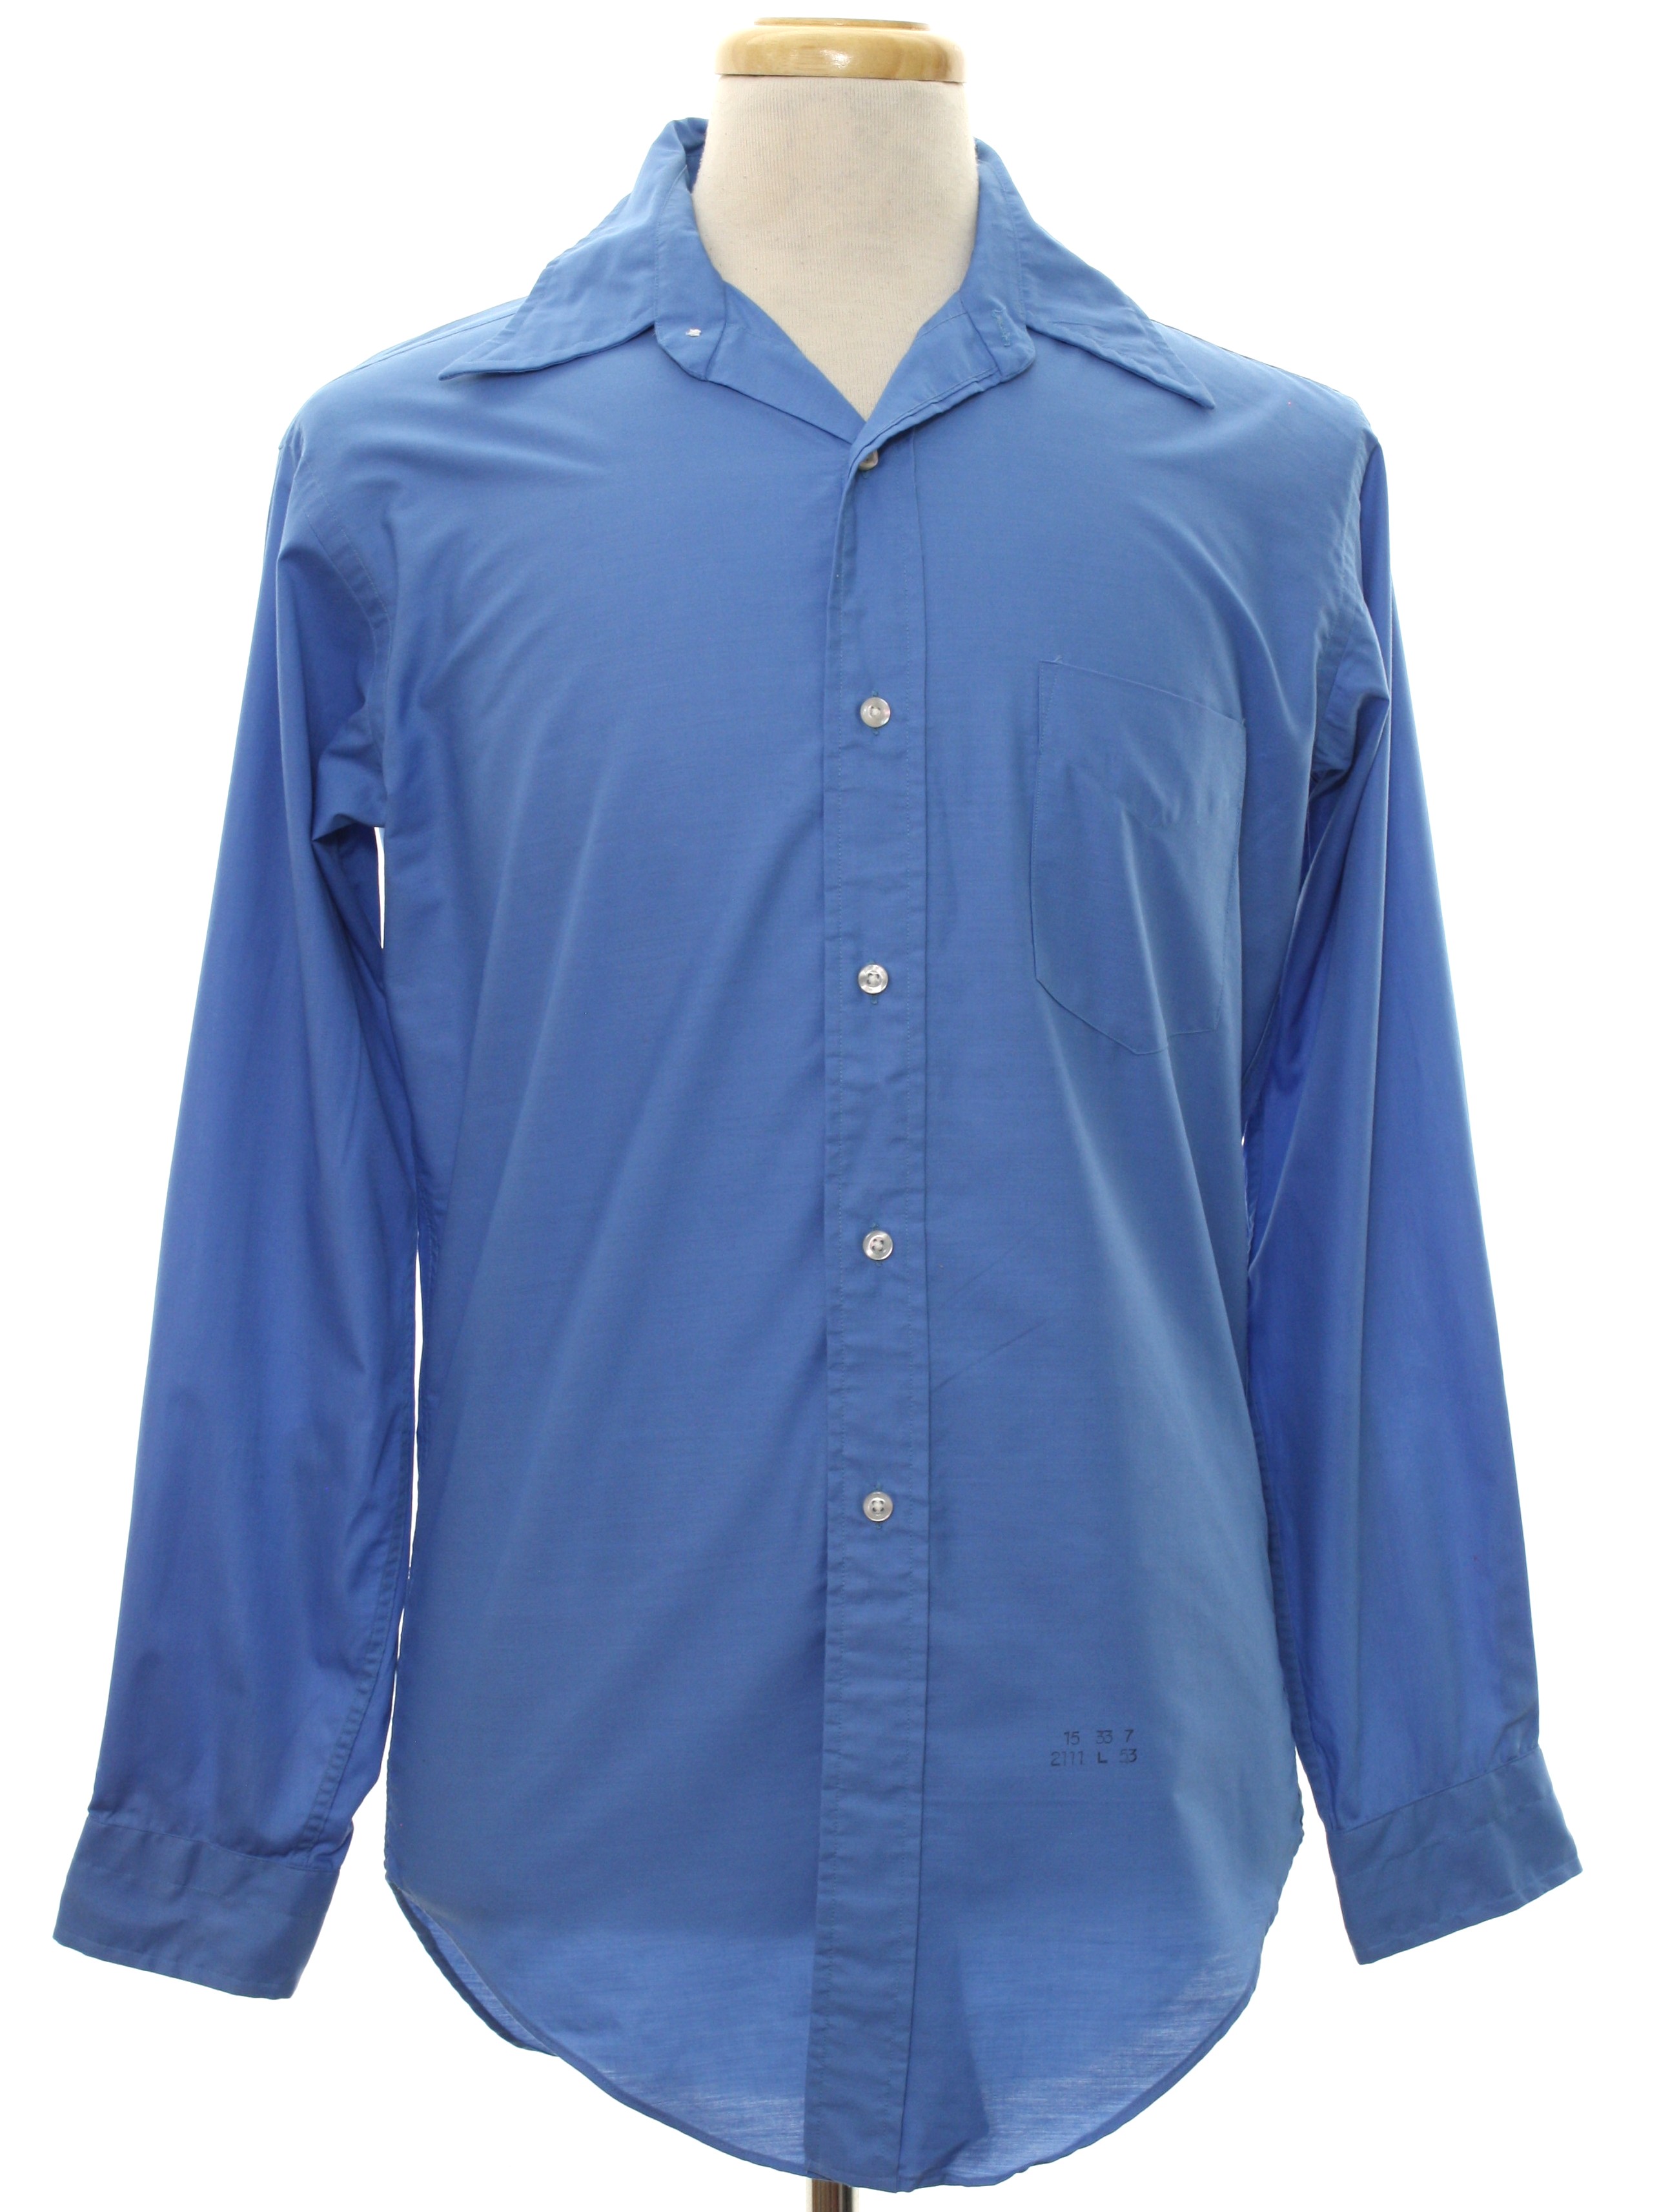 Retro 1970's Shirt (Gant shirtmakers) : 70s -Gant shirtmakers- Mens sky ...